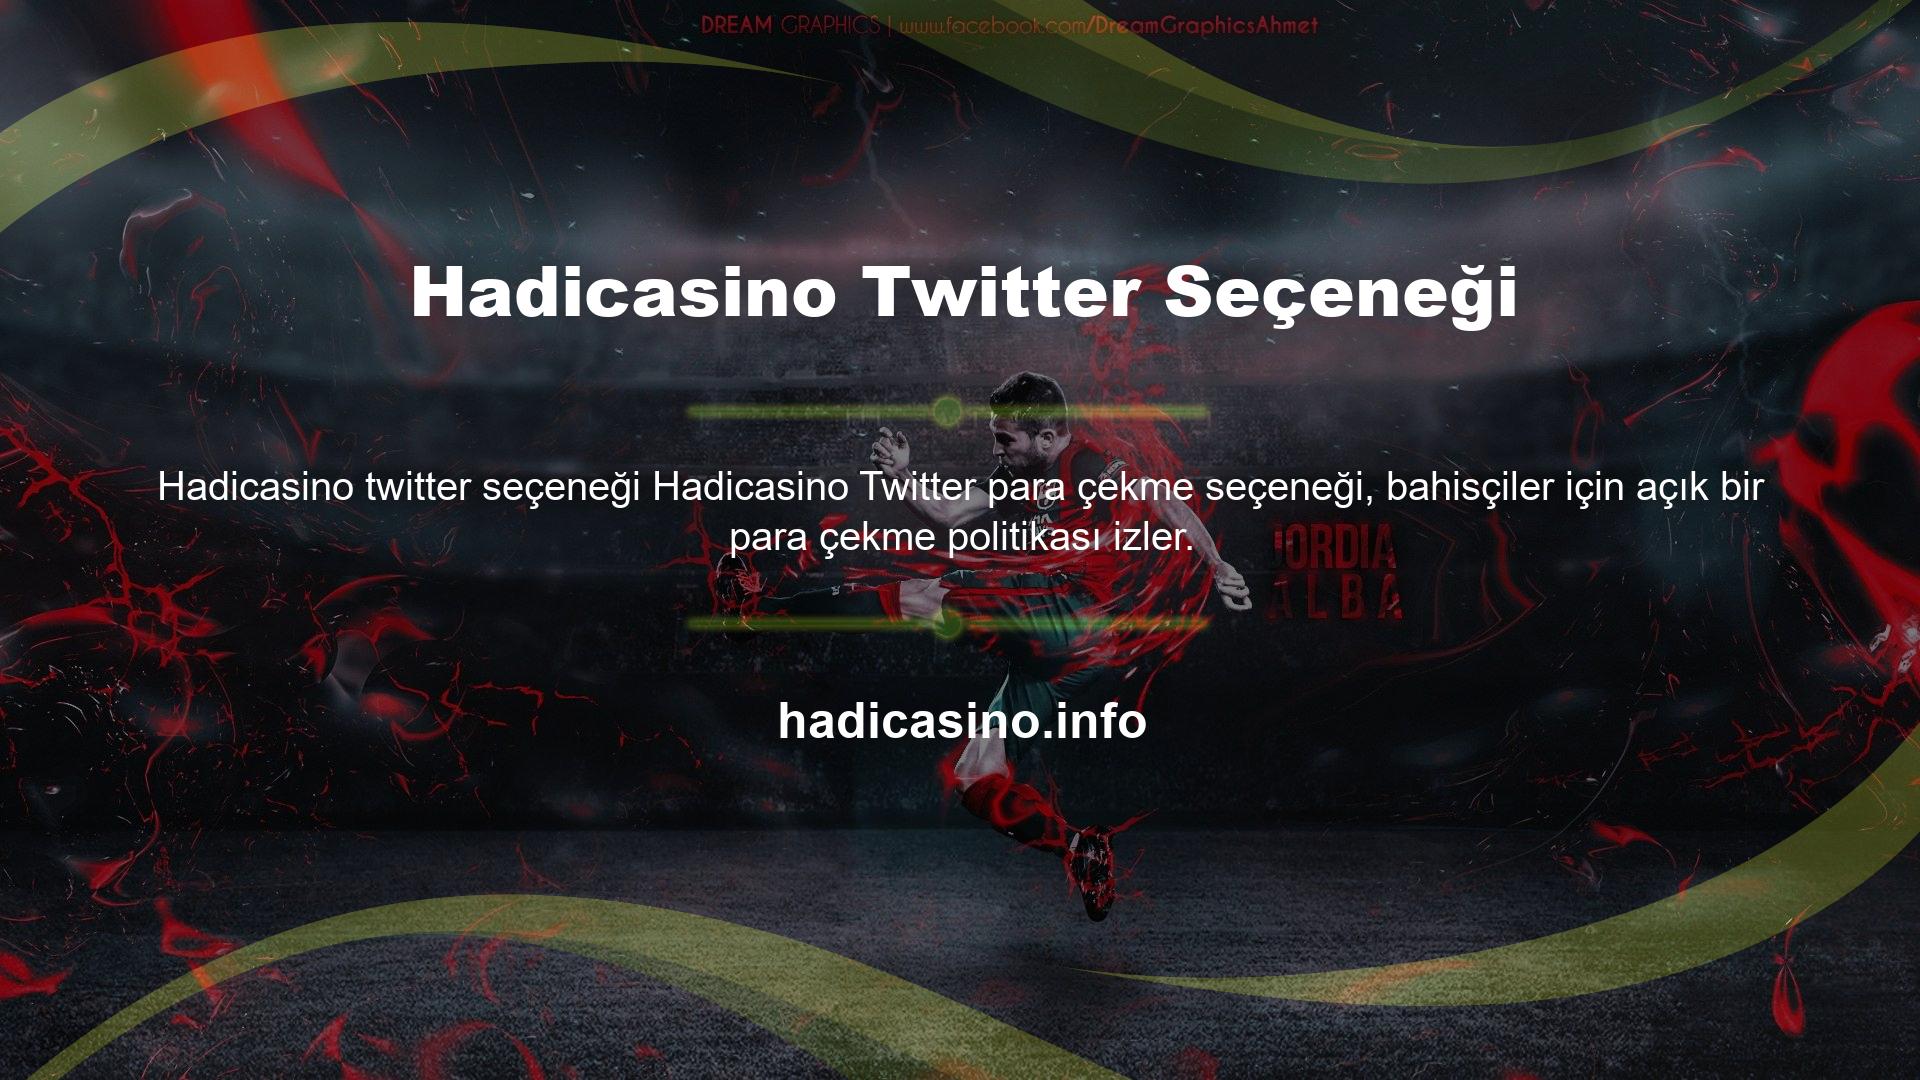 Hadicasino Twitter Seçeneği